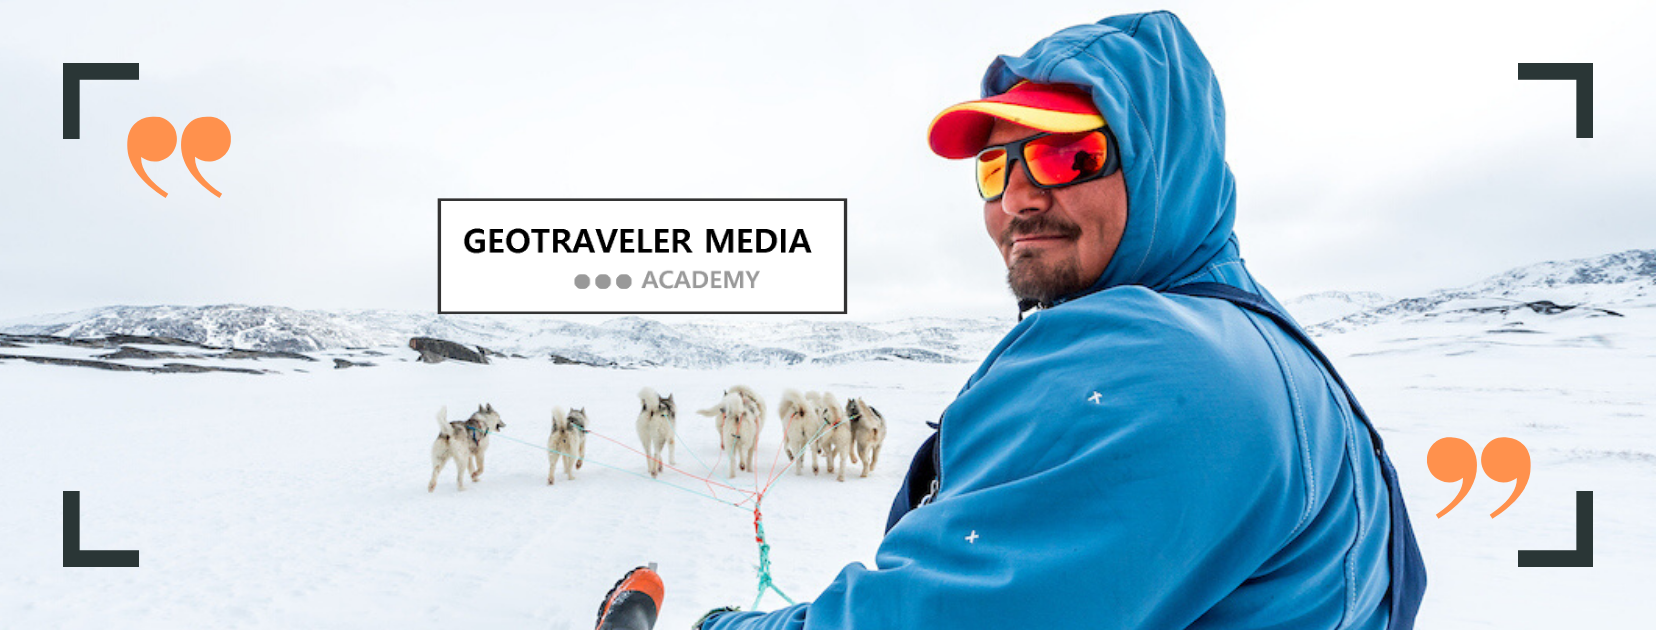 Geotraveler Media Academy